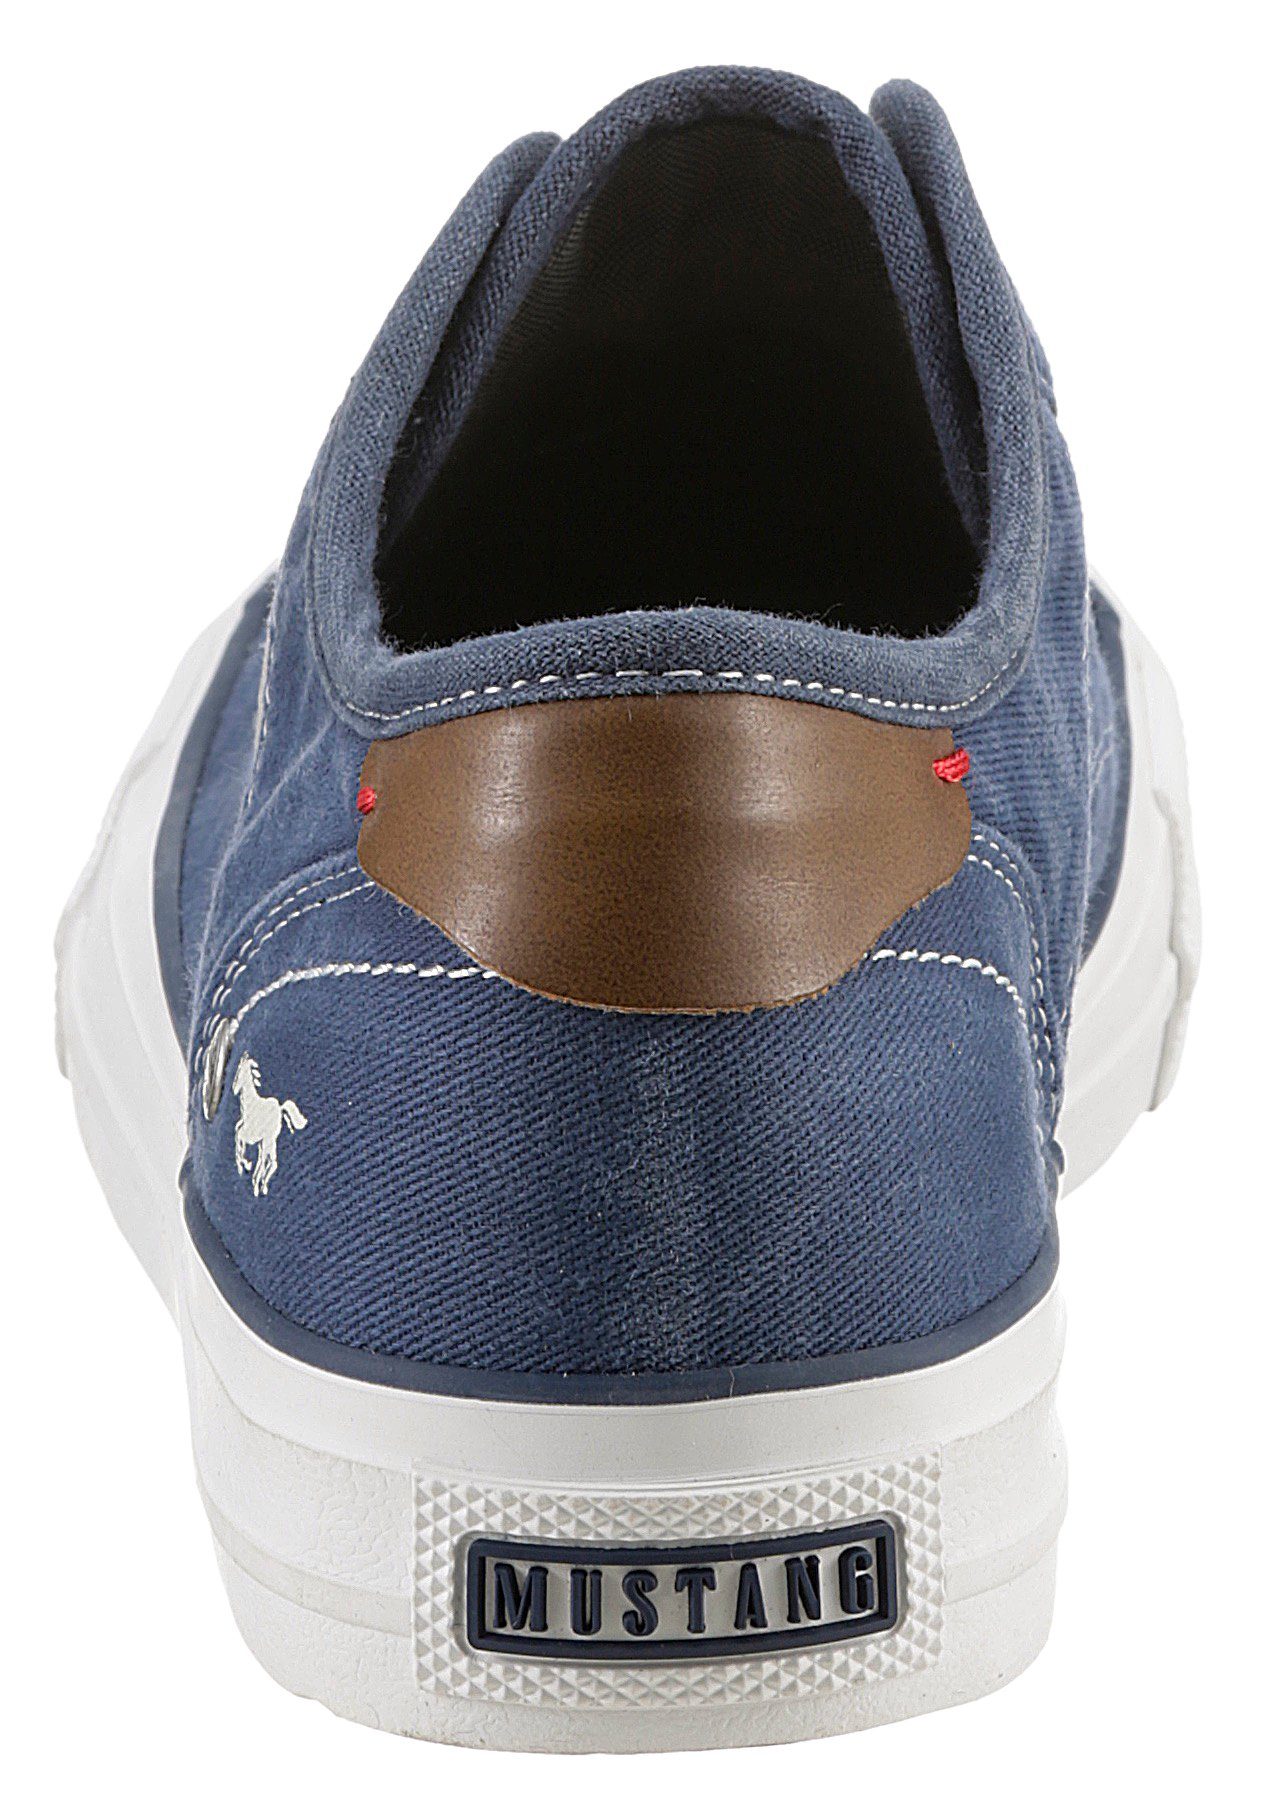 Slip-On Sneaker praktischem Shoes Mustang Gummizug mit dunkelblau